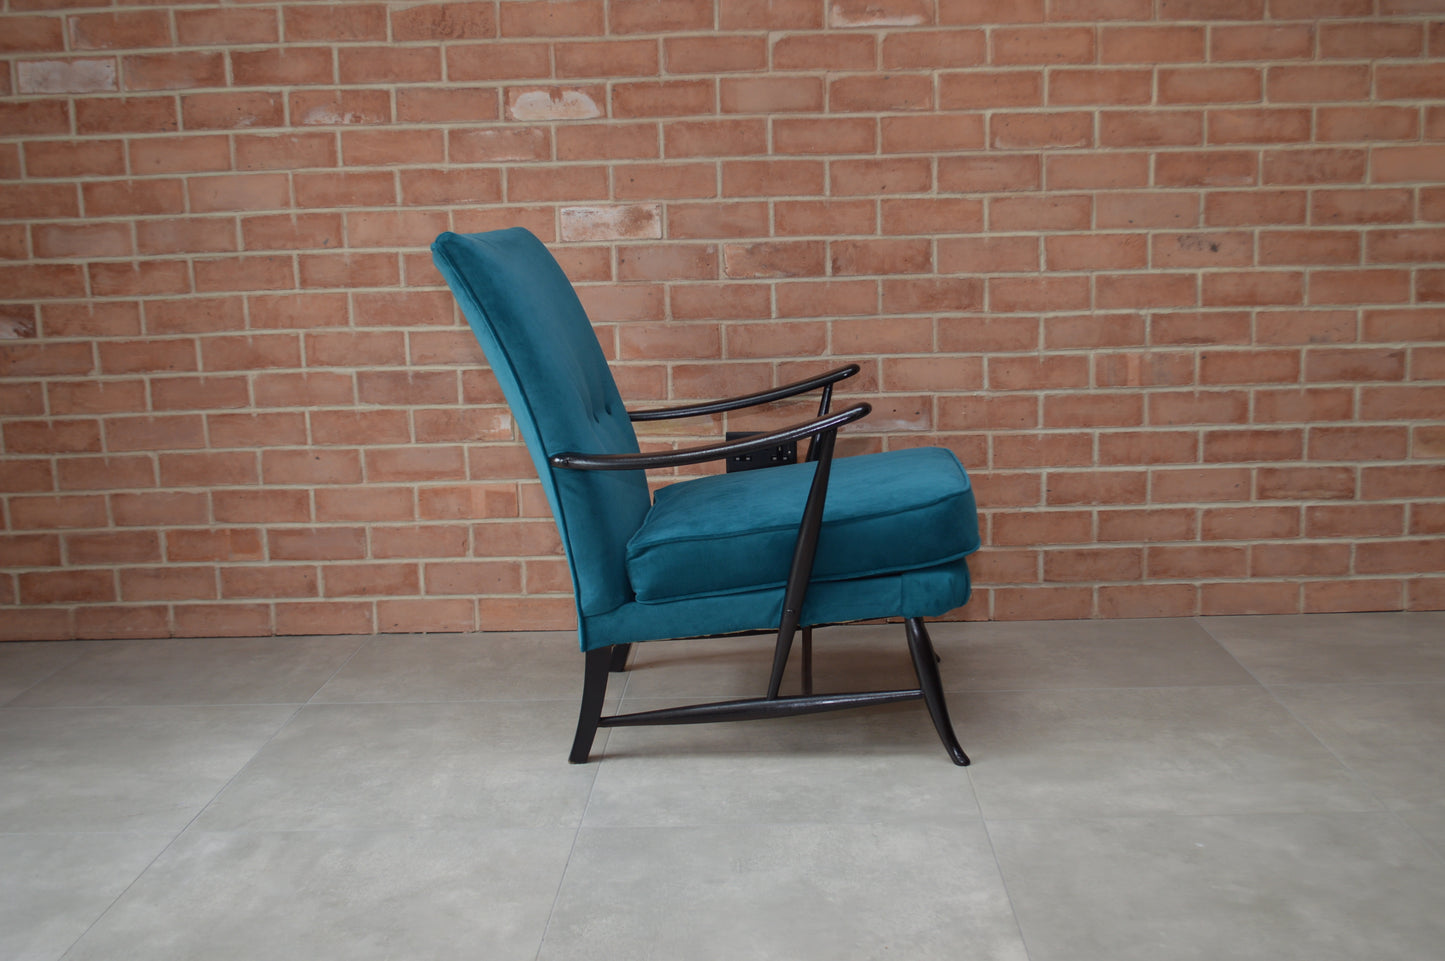 Ercol Easy Chair Model 245 with Teal Velvet cushion, 1950's